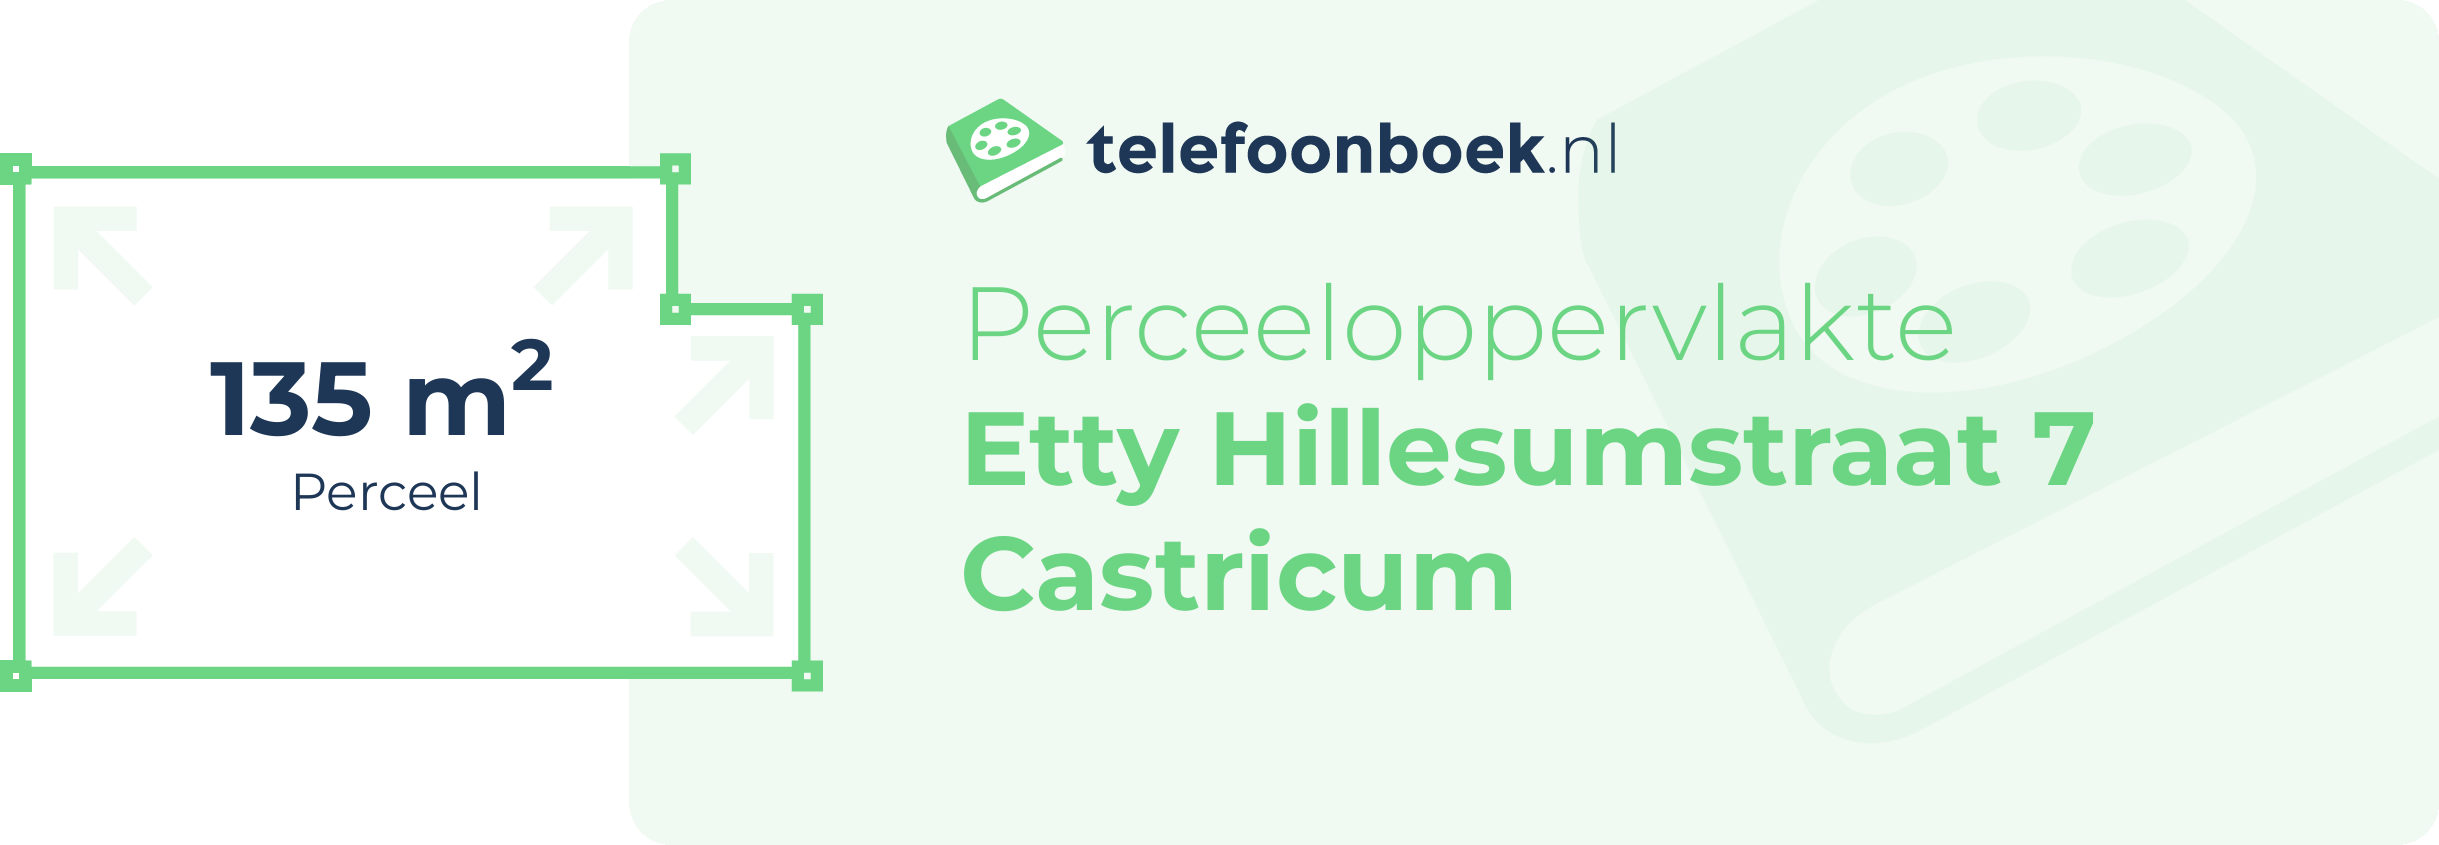 Perceeloppervlakte Etty Hillesumstraat 7 Castricum